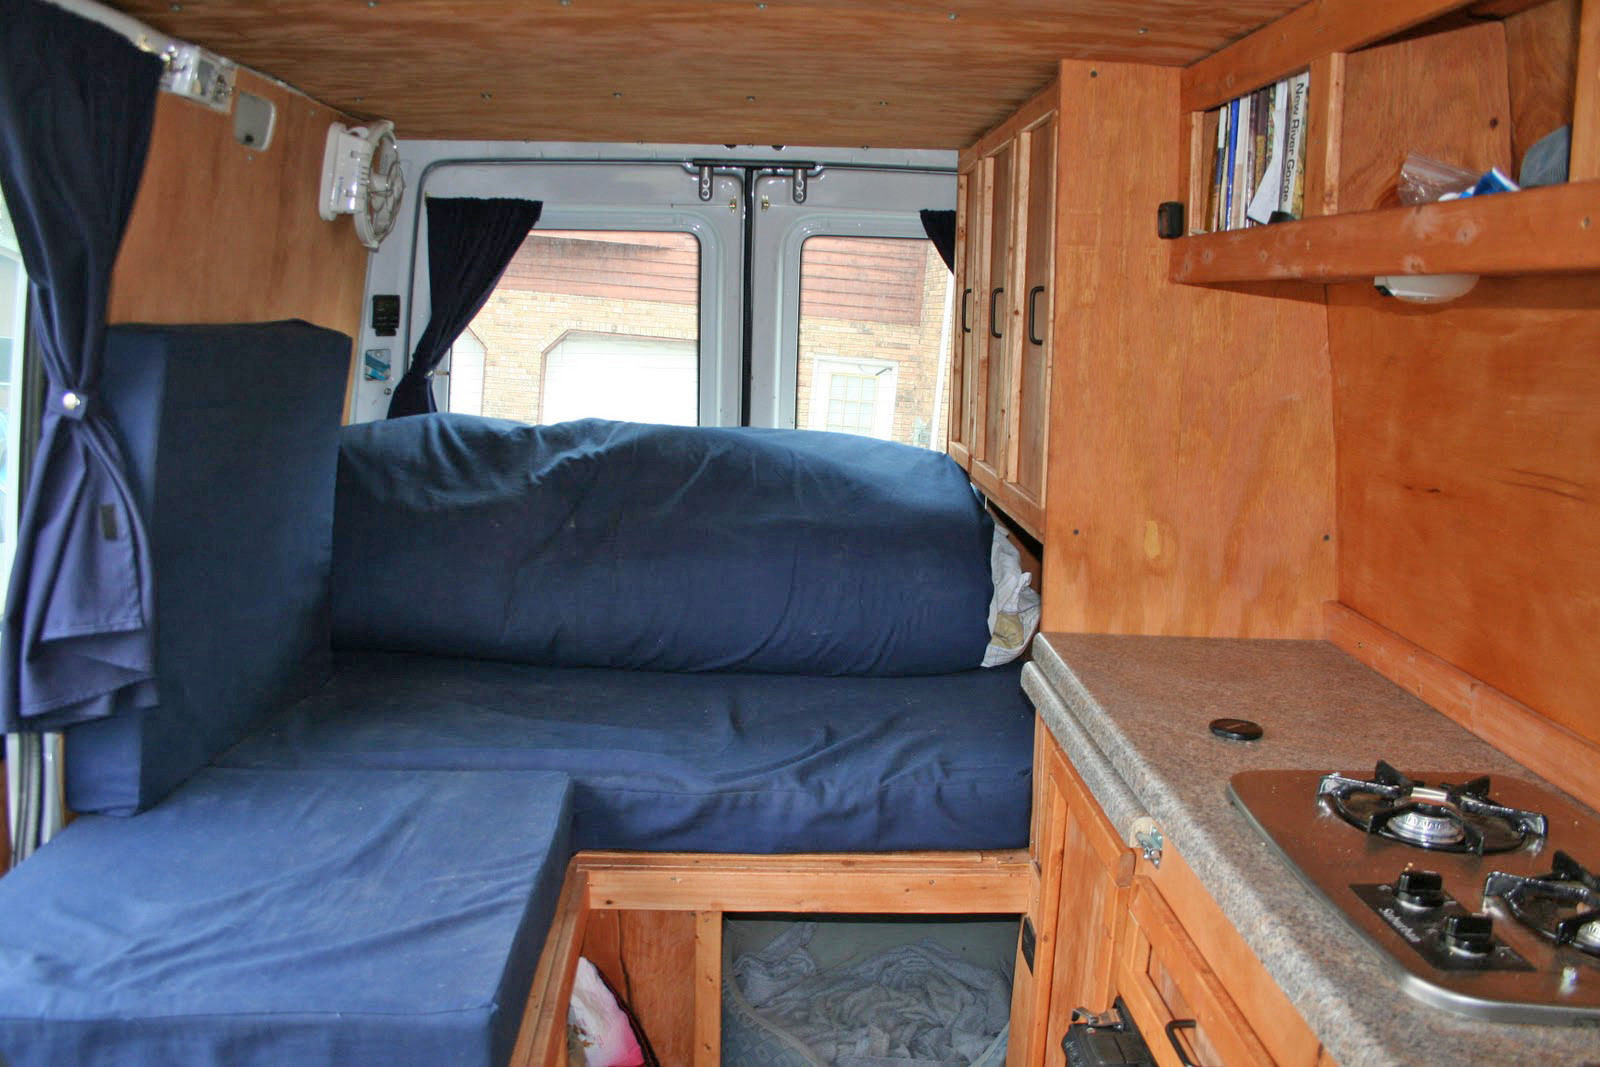 Best ideas about DIY Camper Van
. Save or Pin Sprinter RV Max 2 0 DIY Sprinter Camper Van Now.